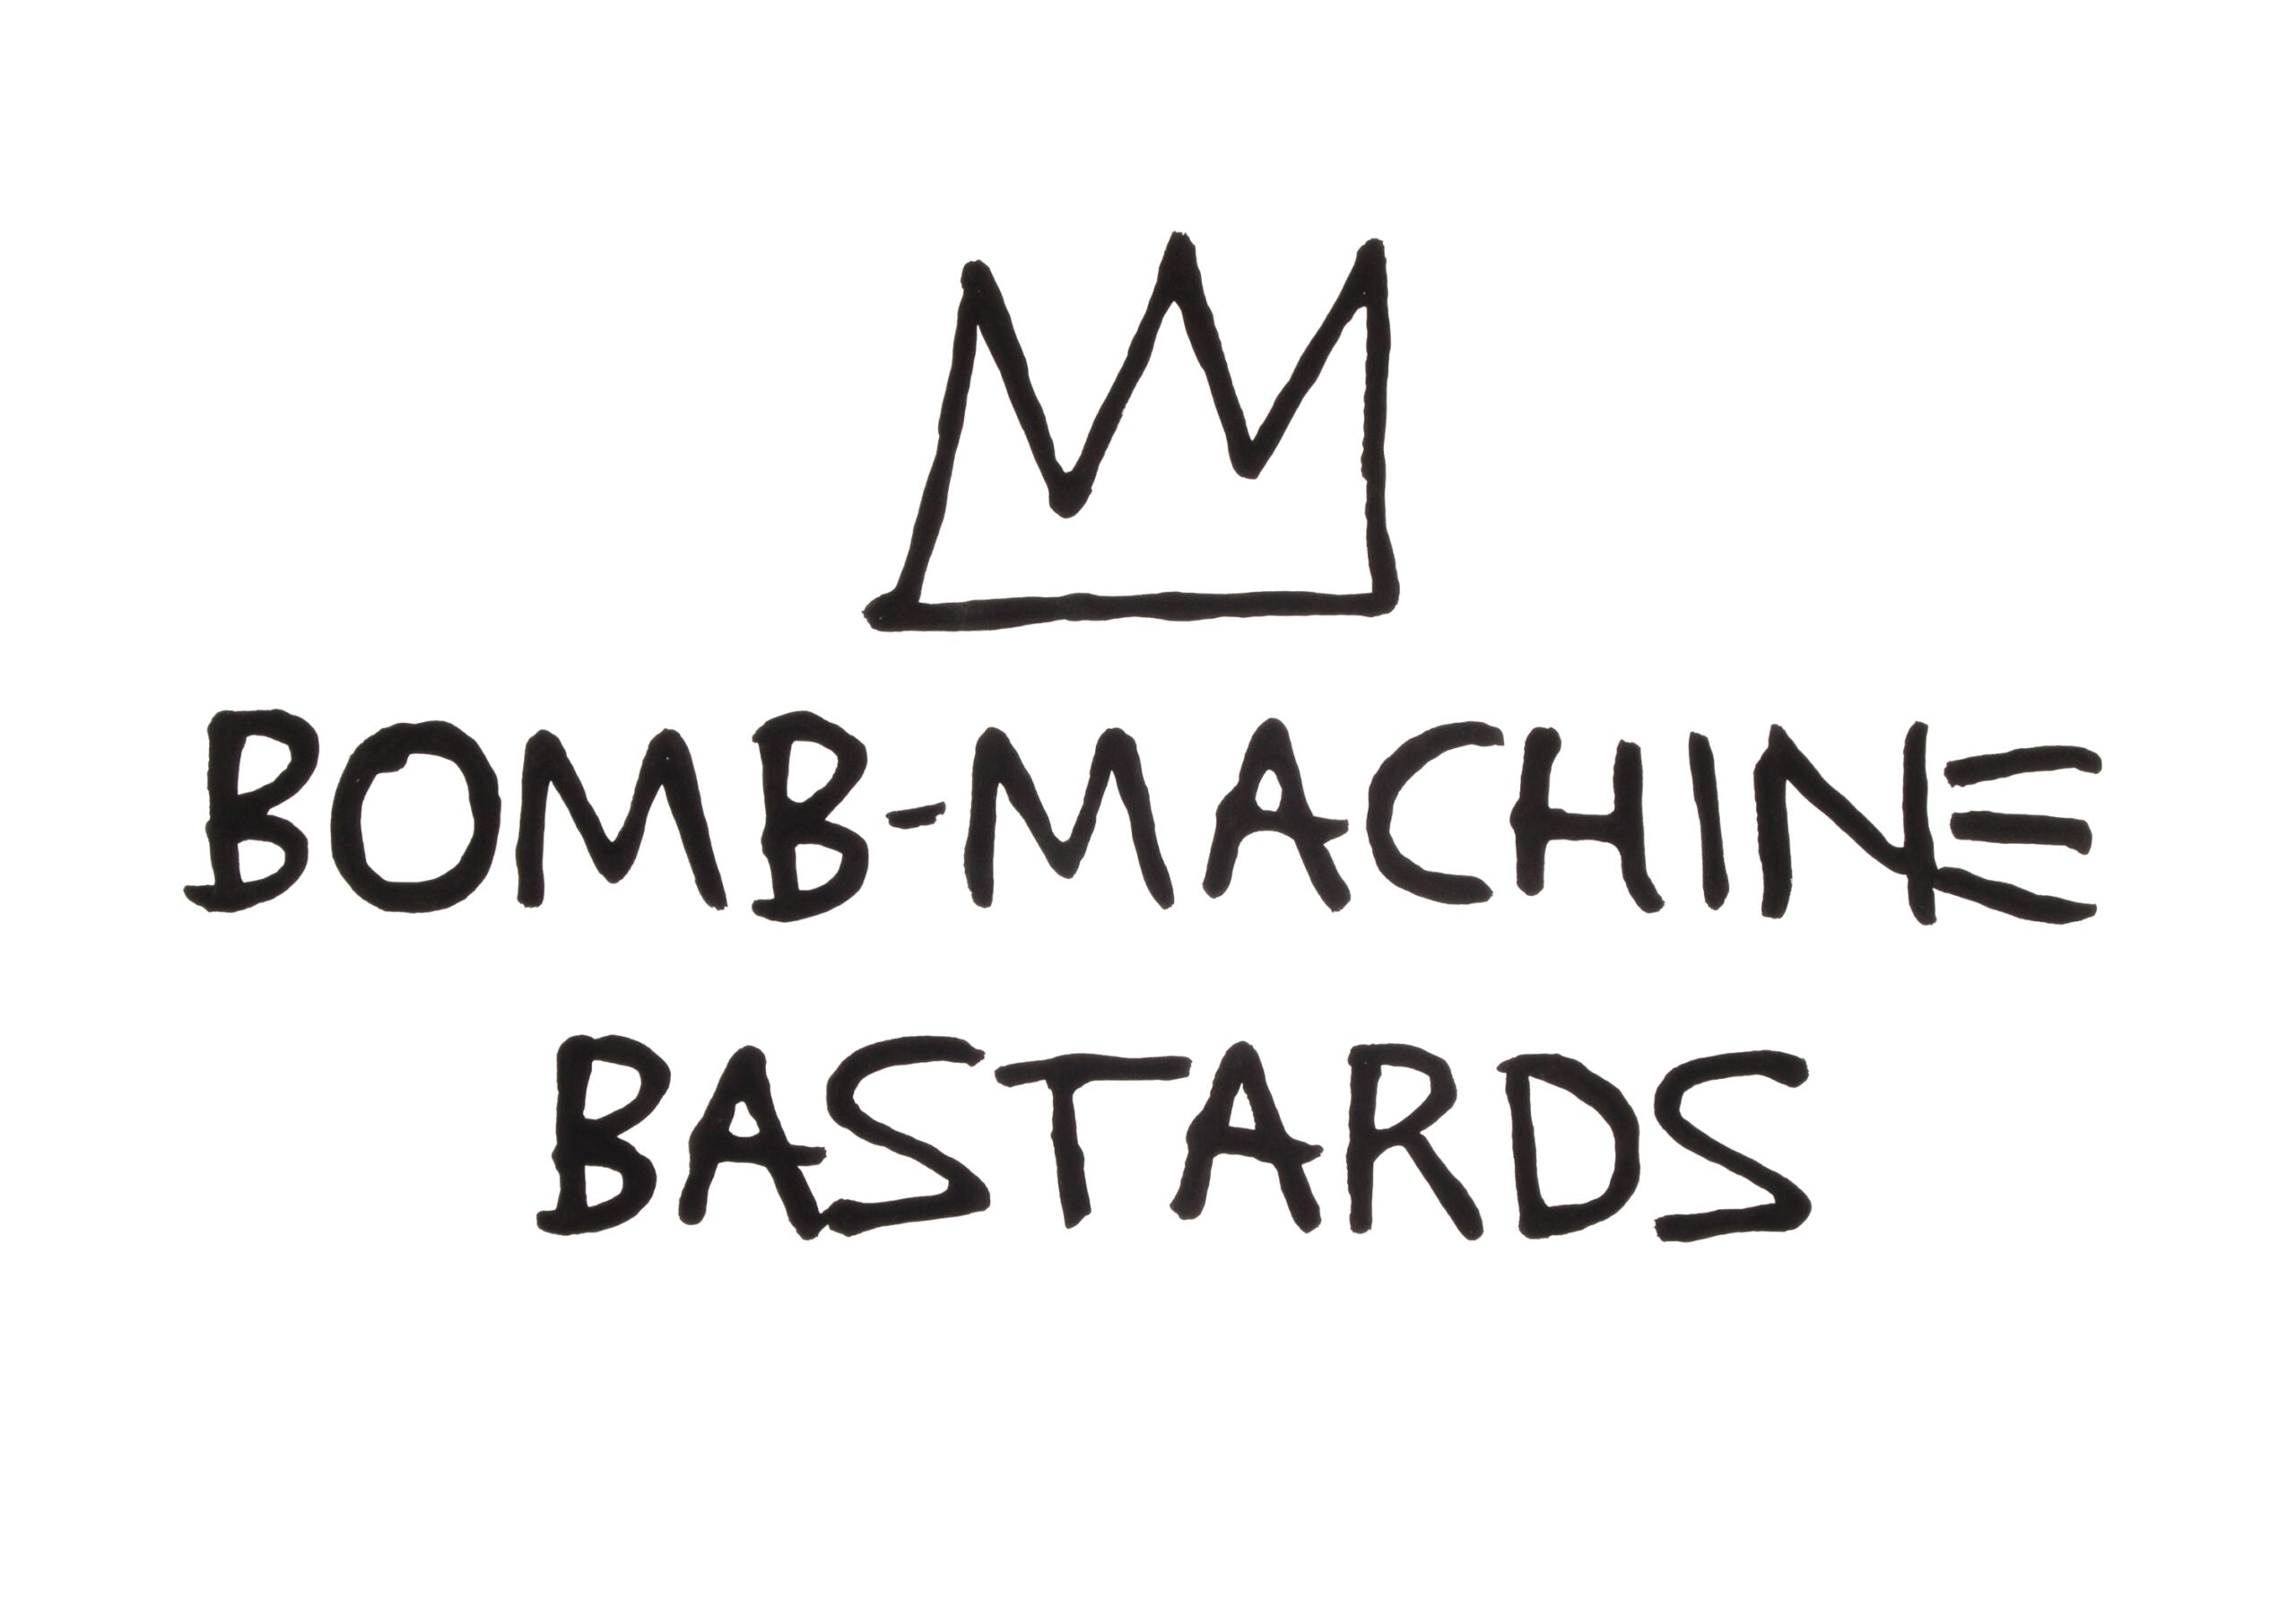 Bomb machine bastards